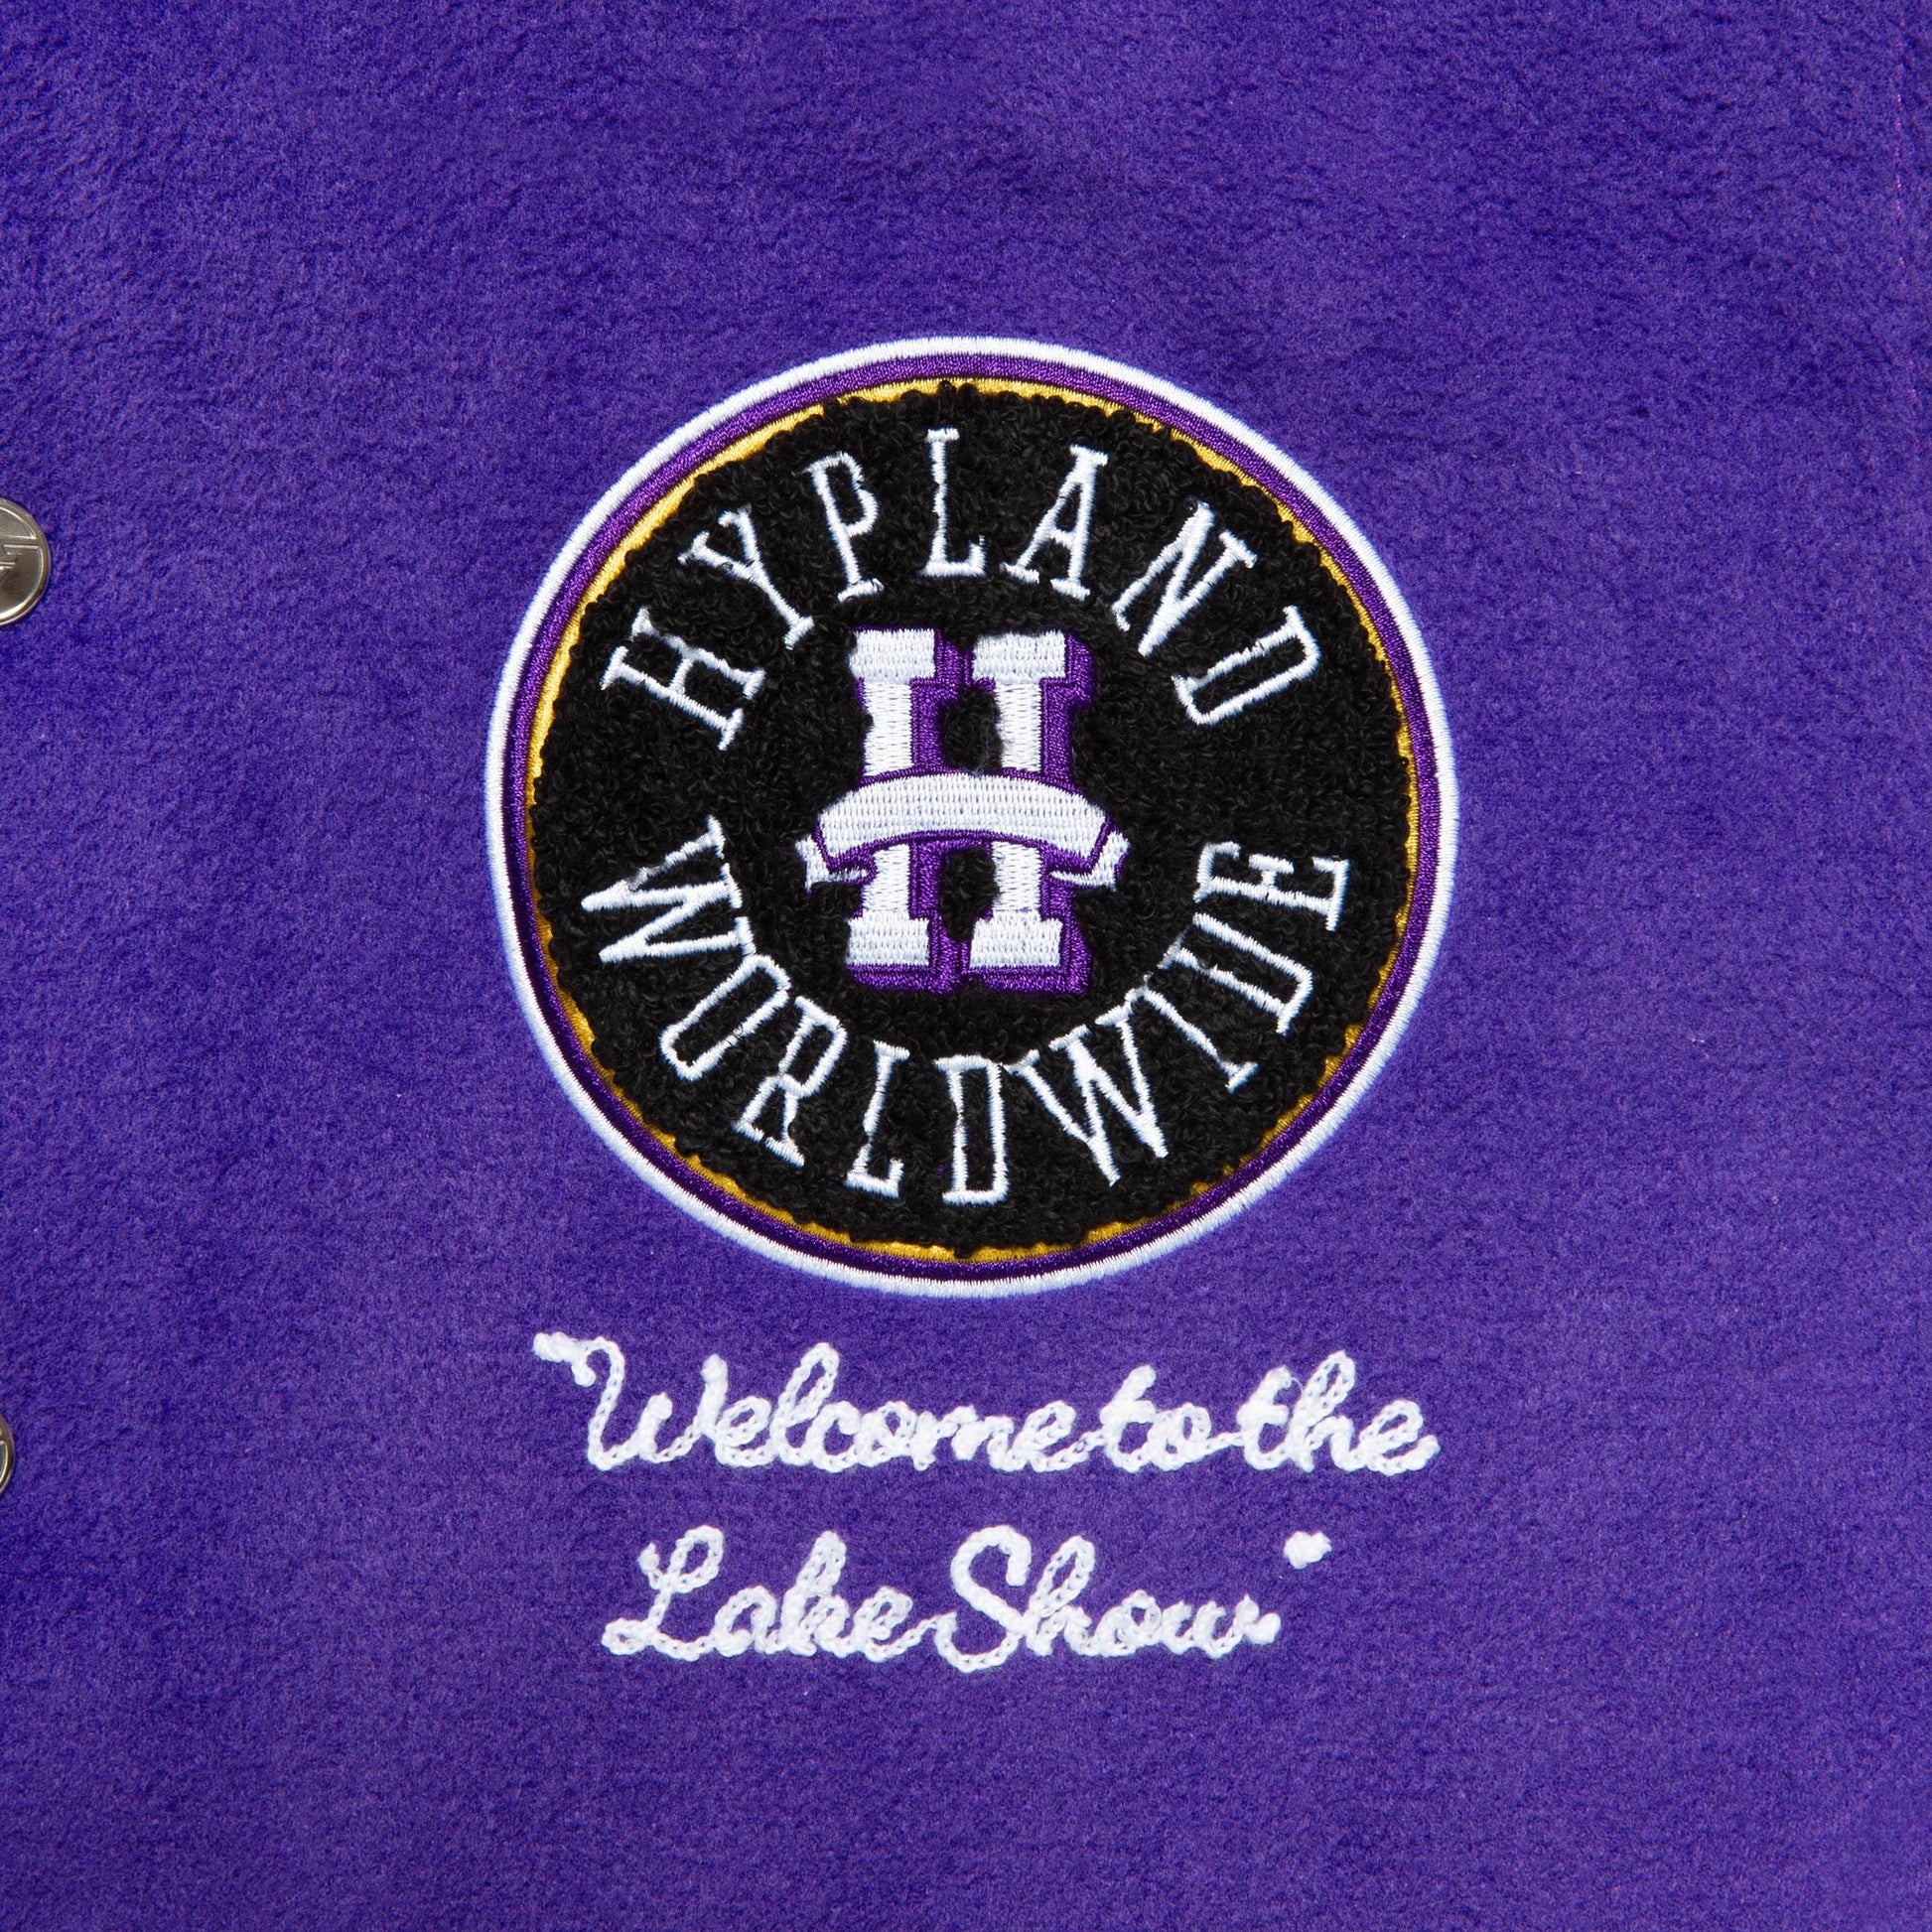 Hypland NBA Los Angeles Lakers Varsity Jacket (Purple) 3XL